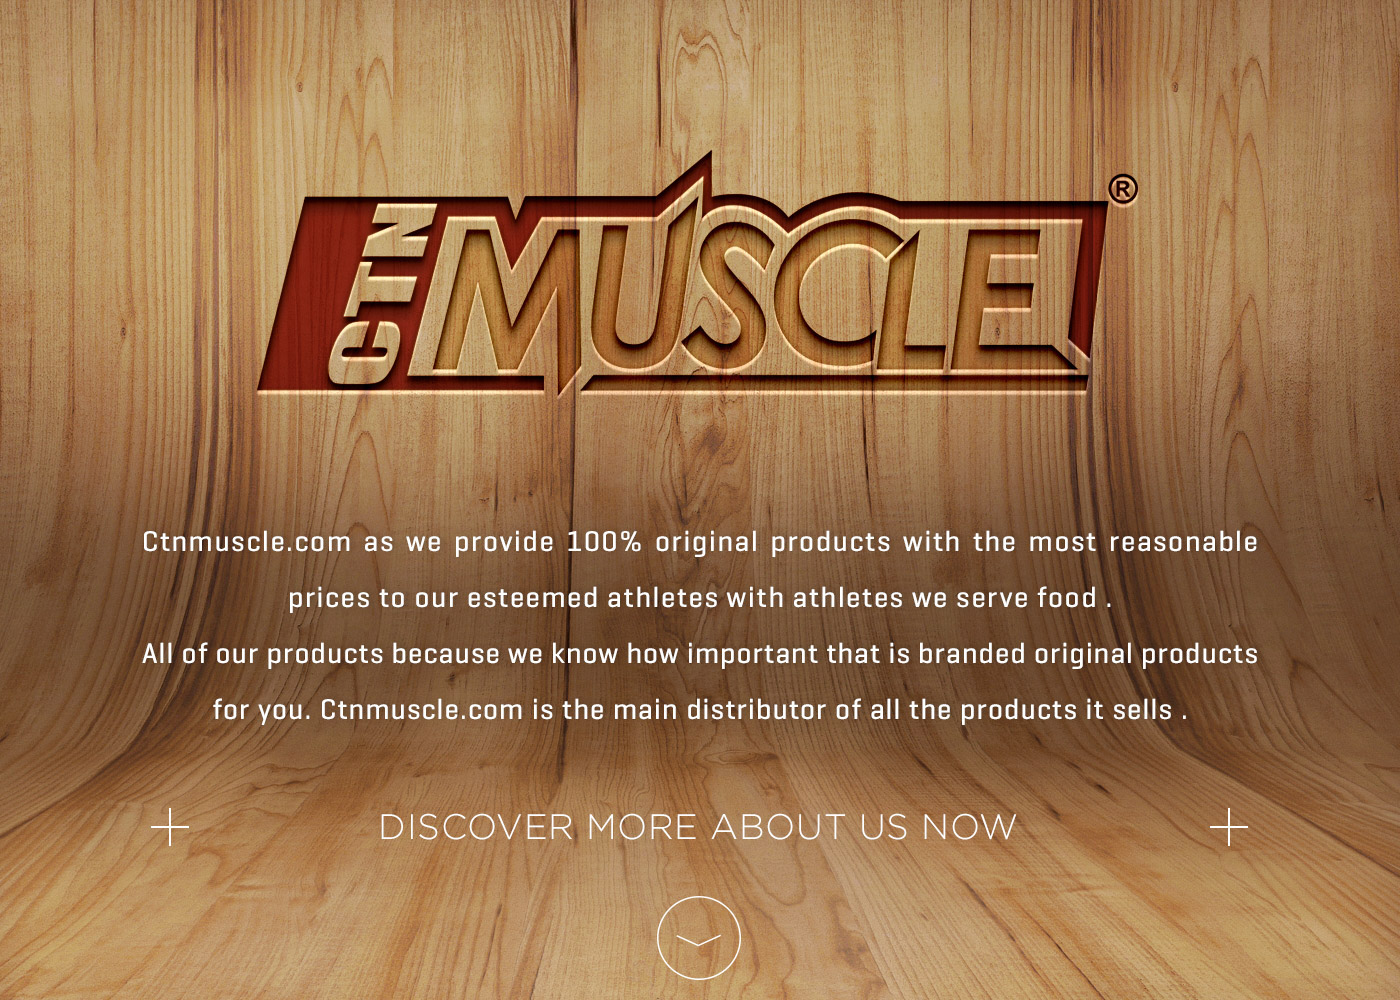 protein whey jar box iphone ios sport Bodybuild muscle supplament e-commerce BodyBuilding nutriens brand UI